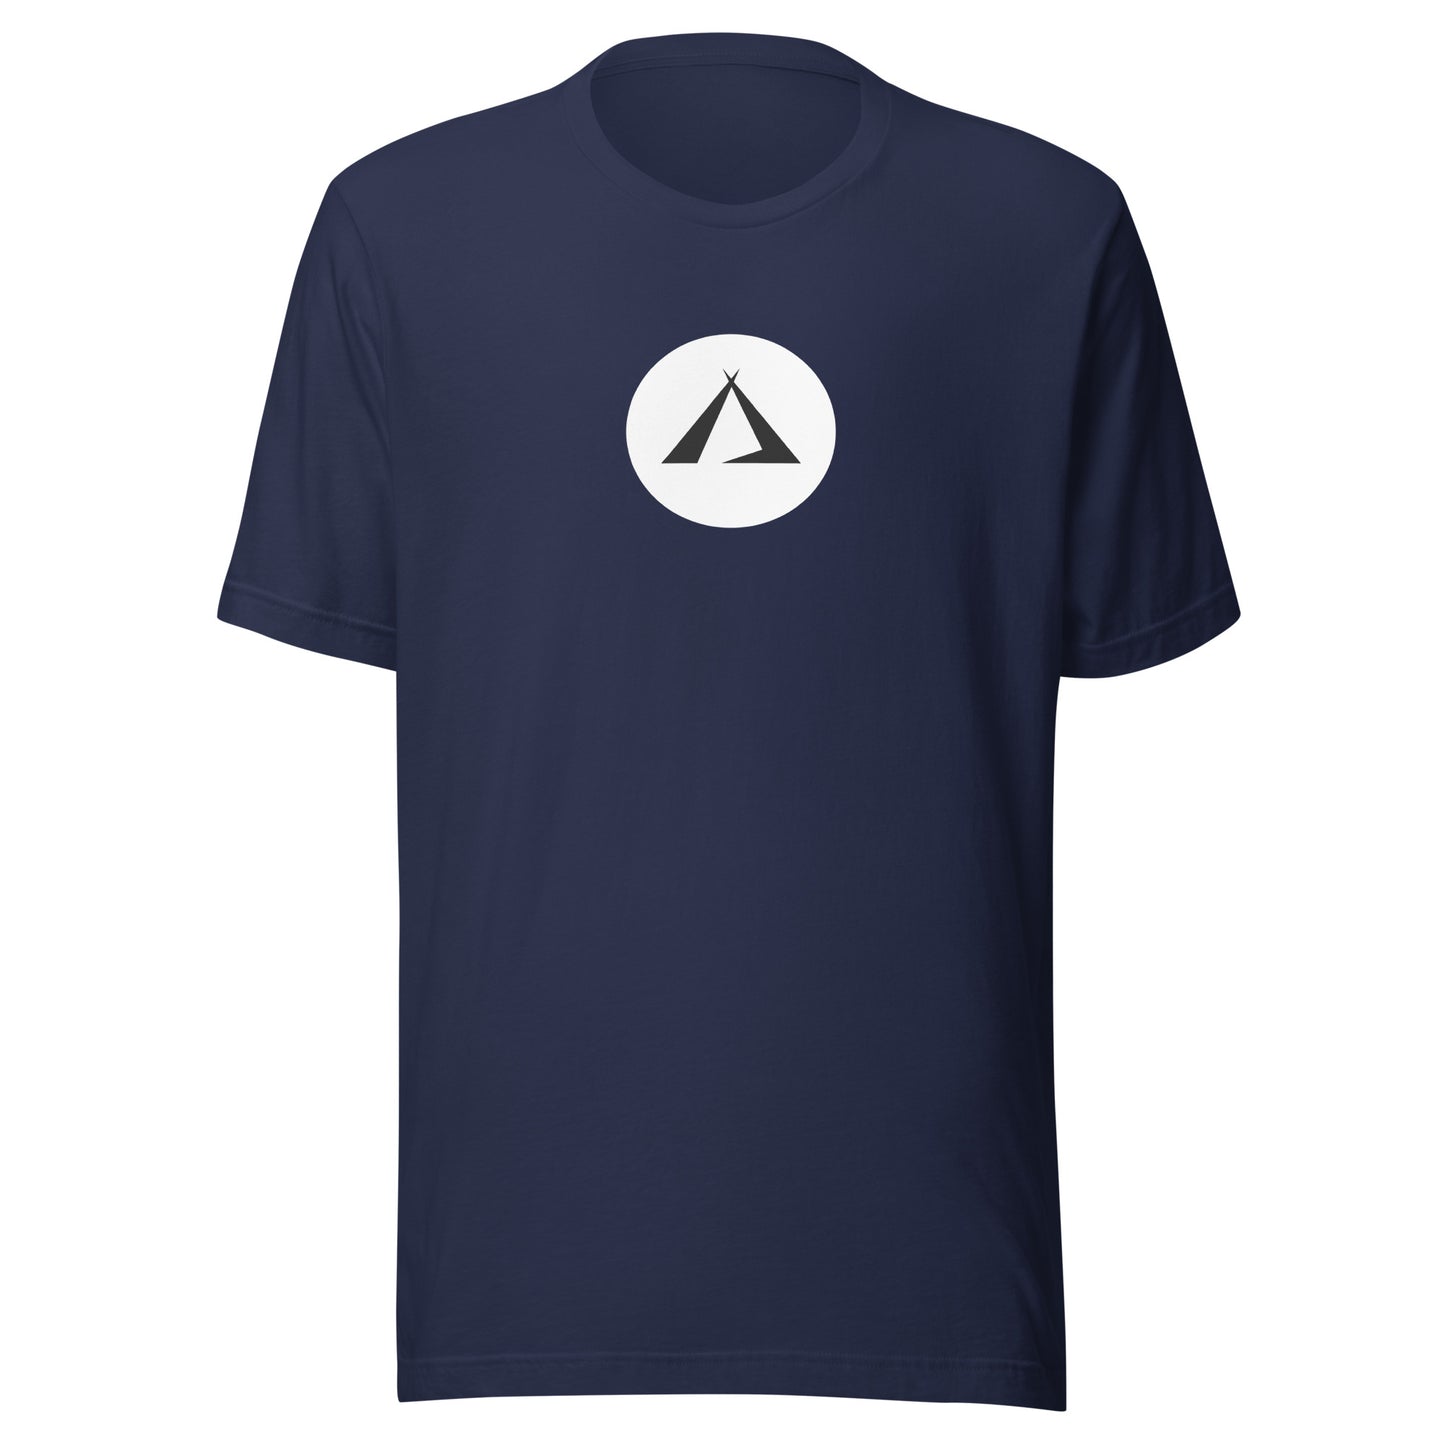 ANOYNTD Halo TeePee (W) Unisex t-shirt